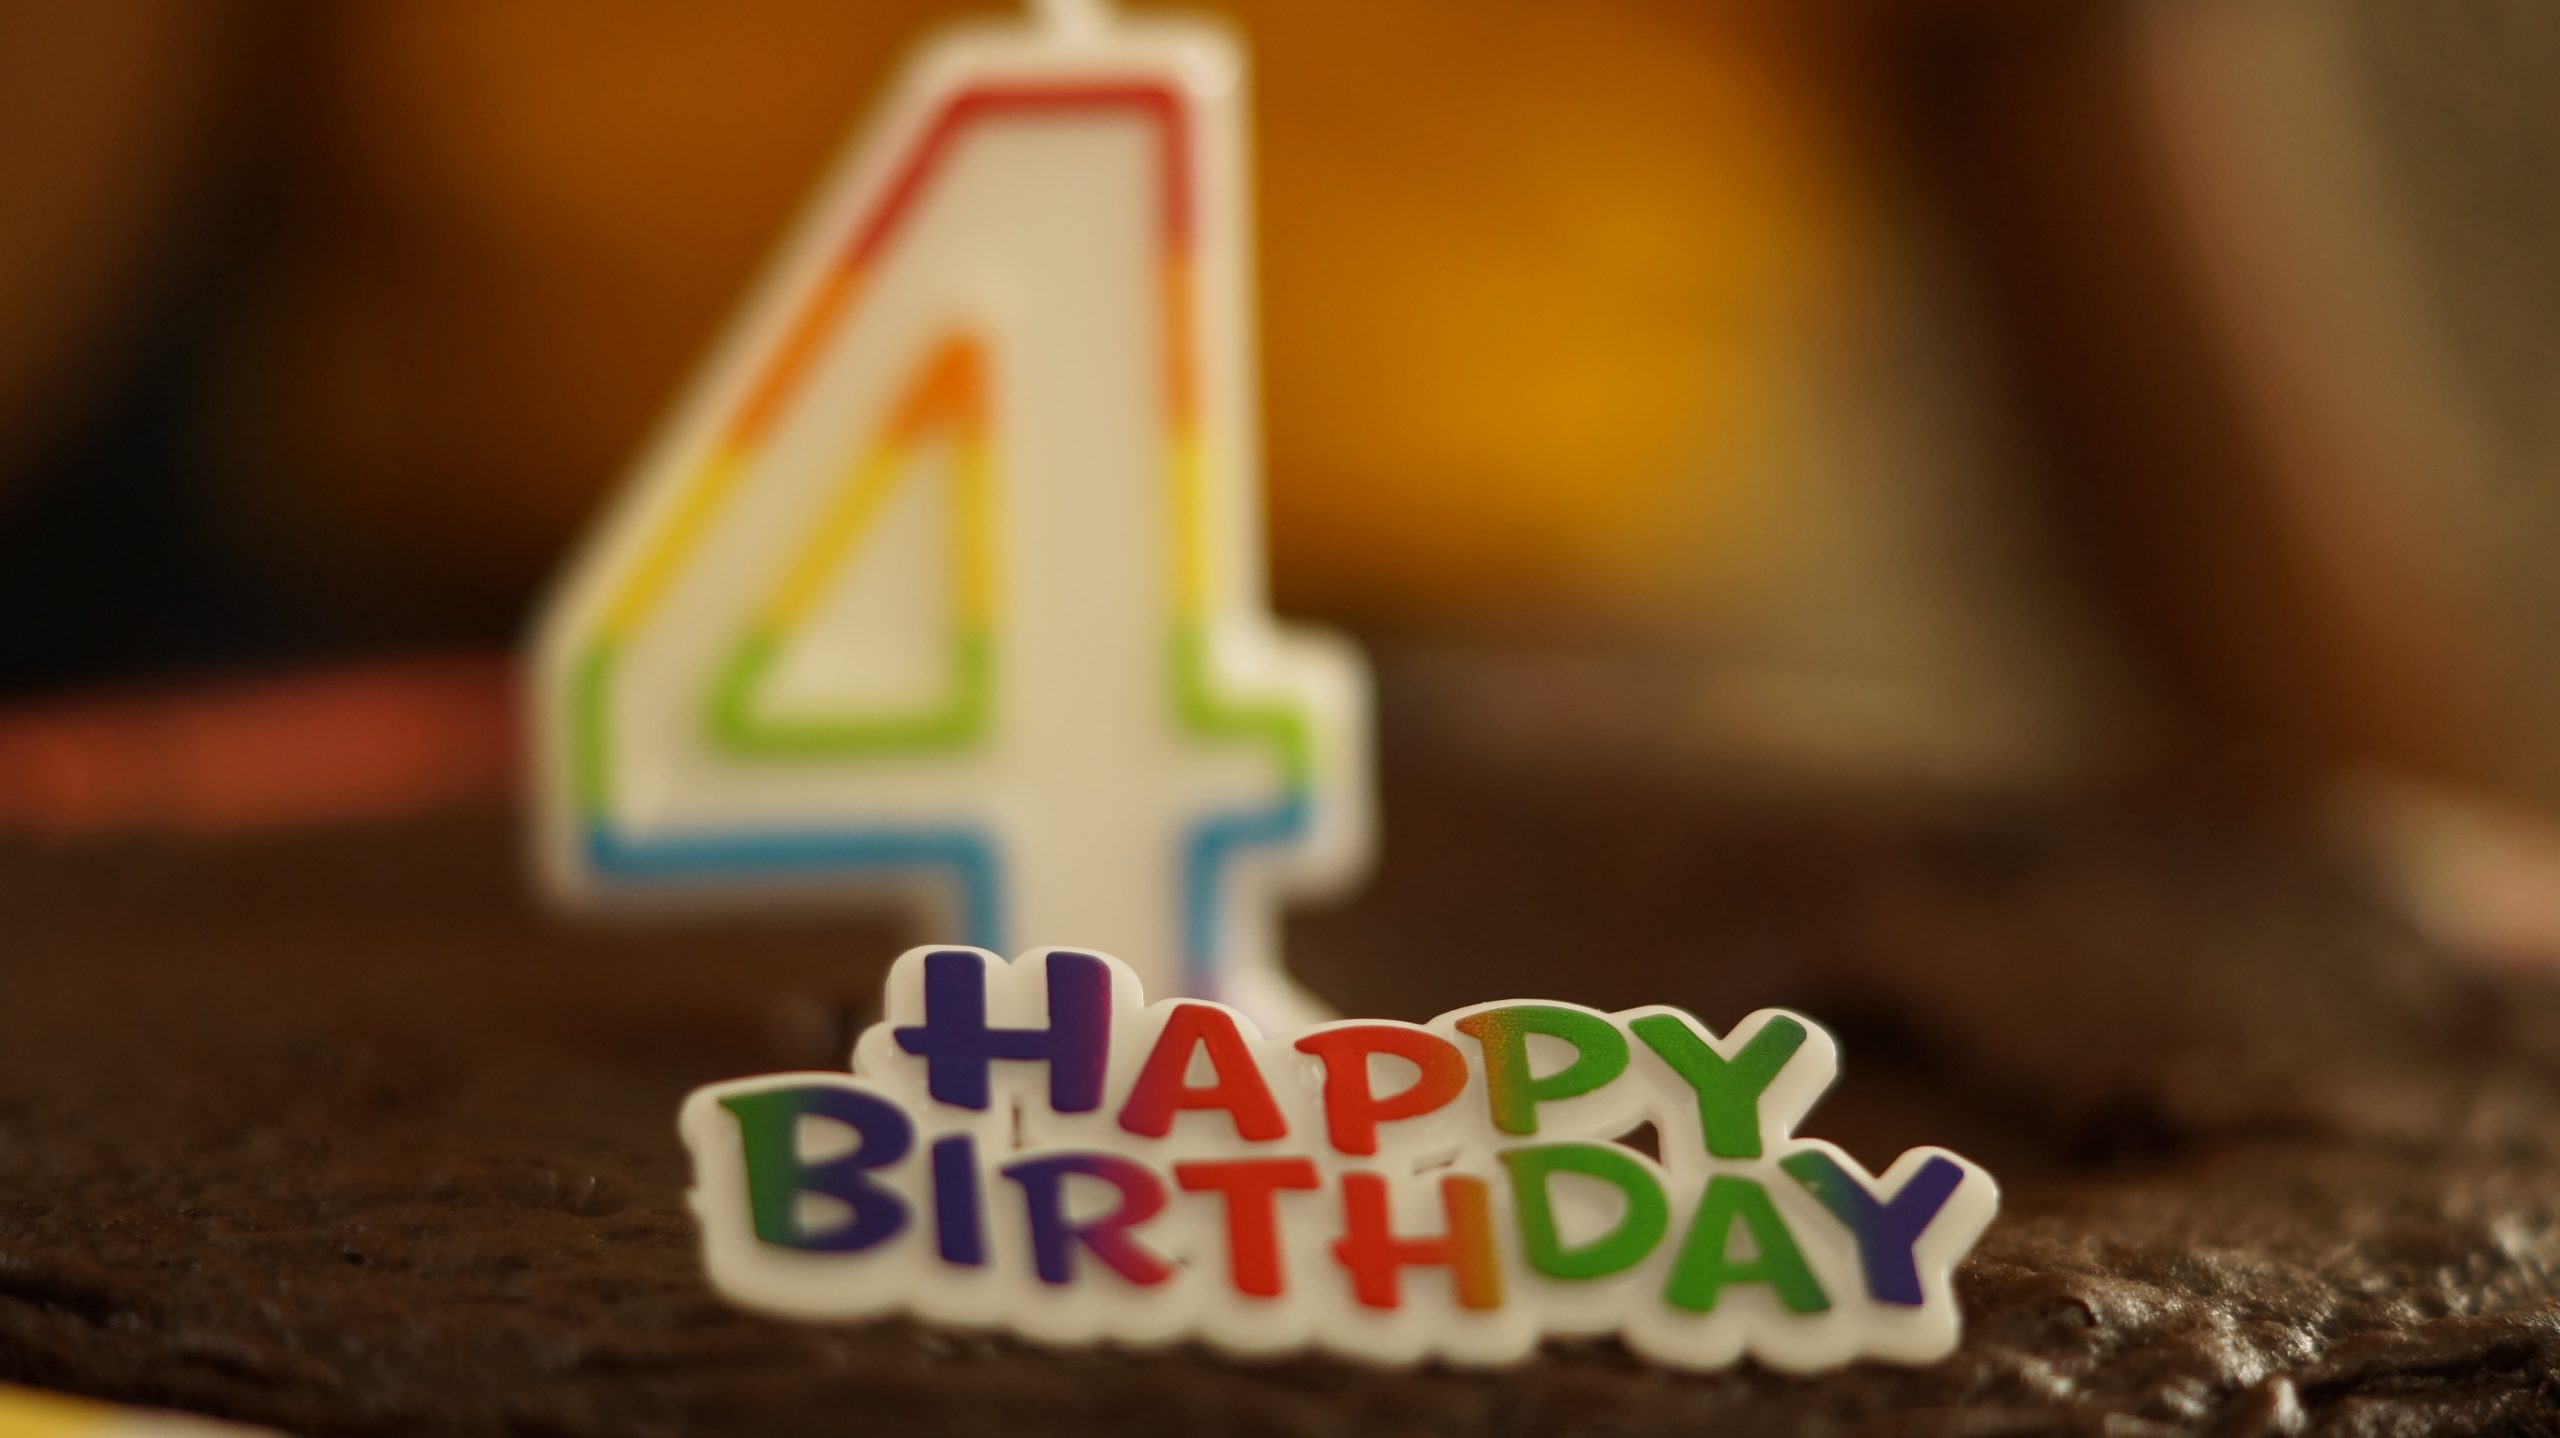 Happy birthday tag on a cake